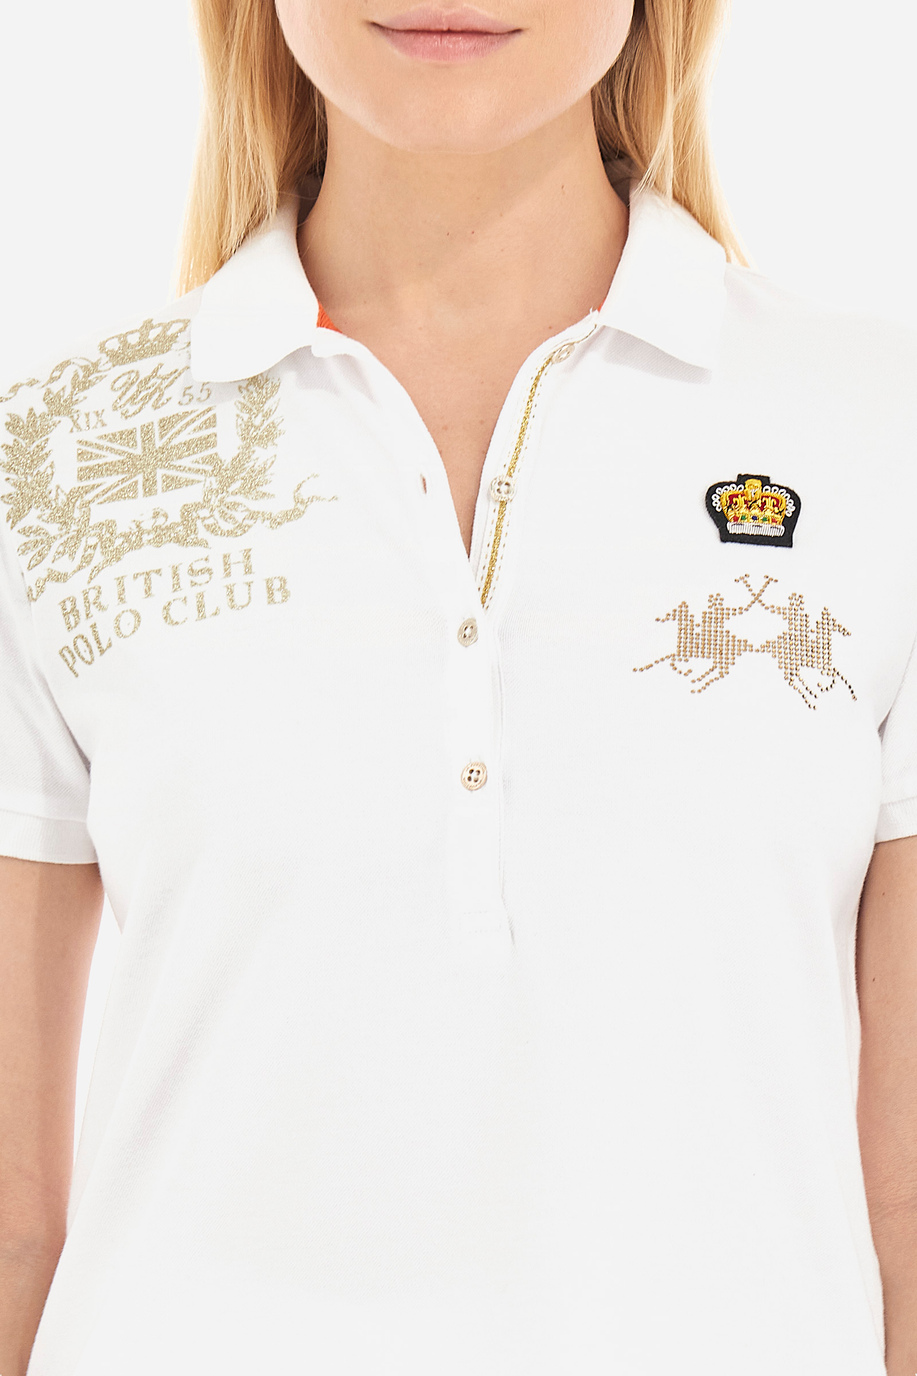 Damen-Kurzarm-Poloshirt aus Baumwolle- Violante - Poloshirts | La Martina - Official Online Shop